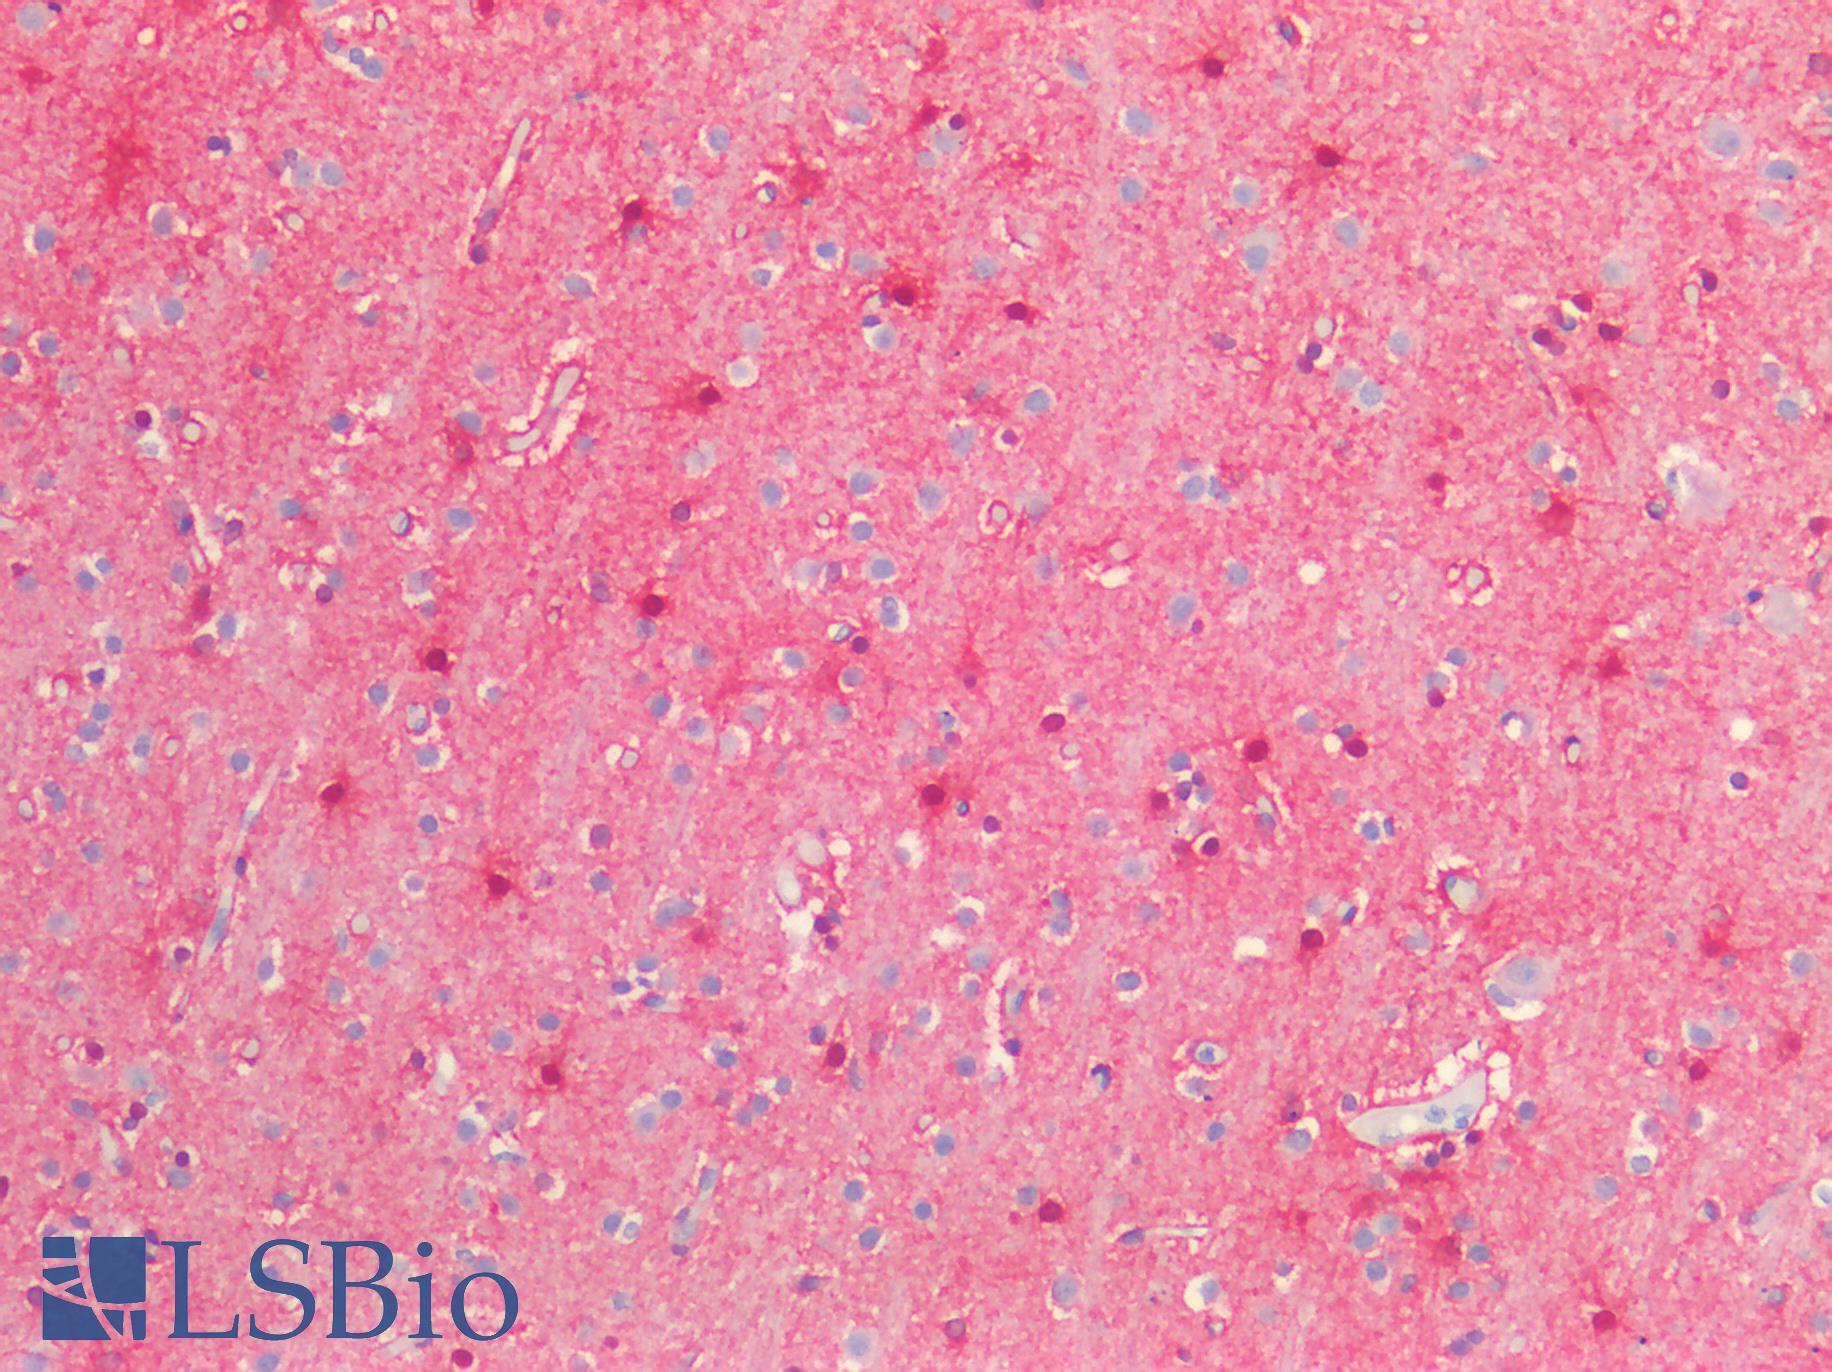 S100B / S100 Beta Antibody - Human Brain, Cortex: Formalin-Fixed, Paraffin-Embedded (FFPE)